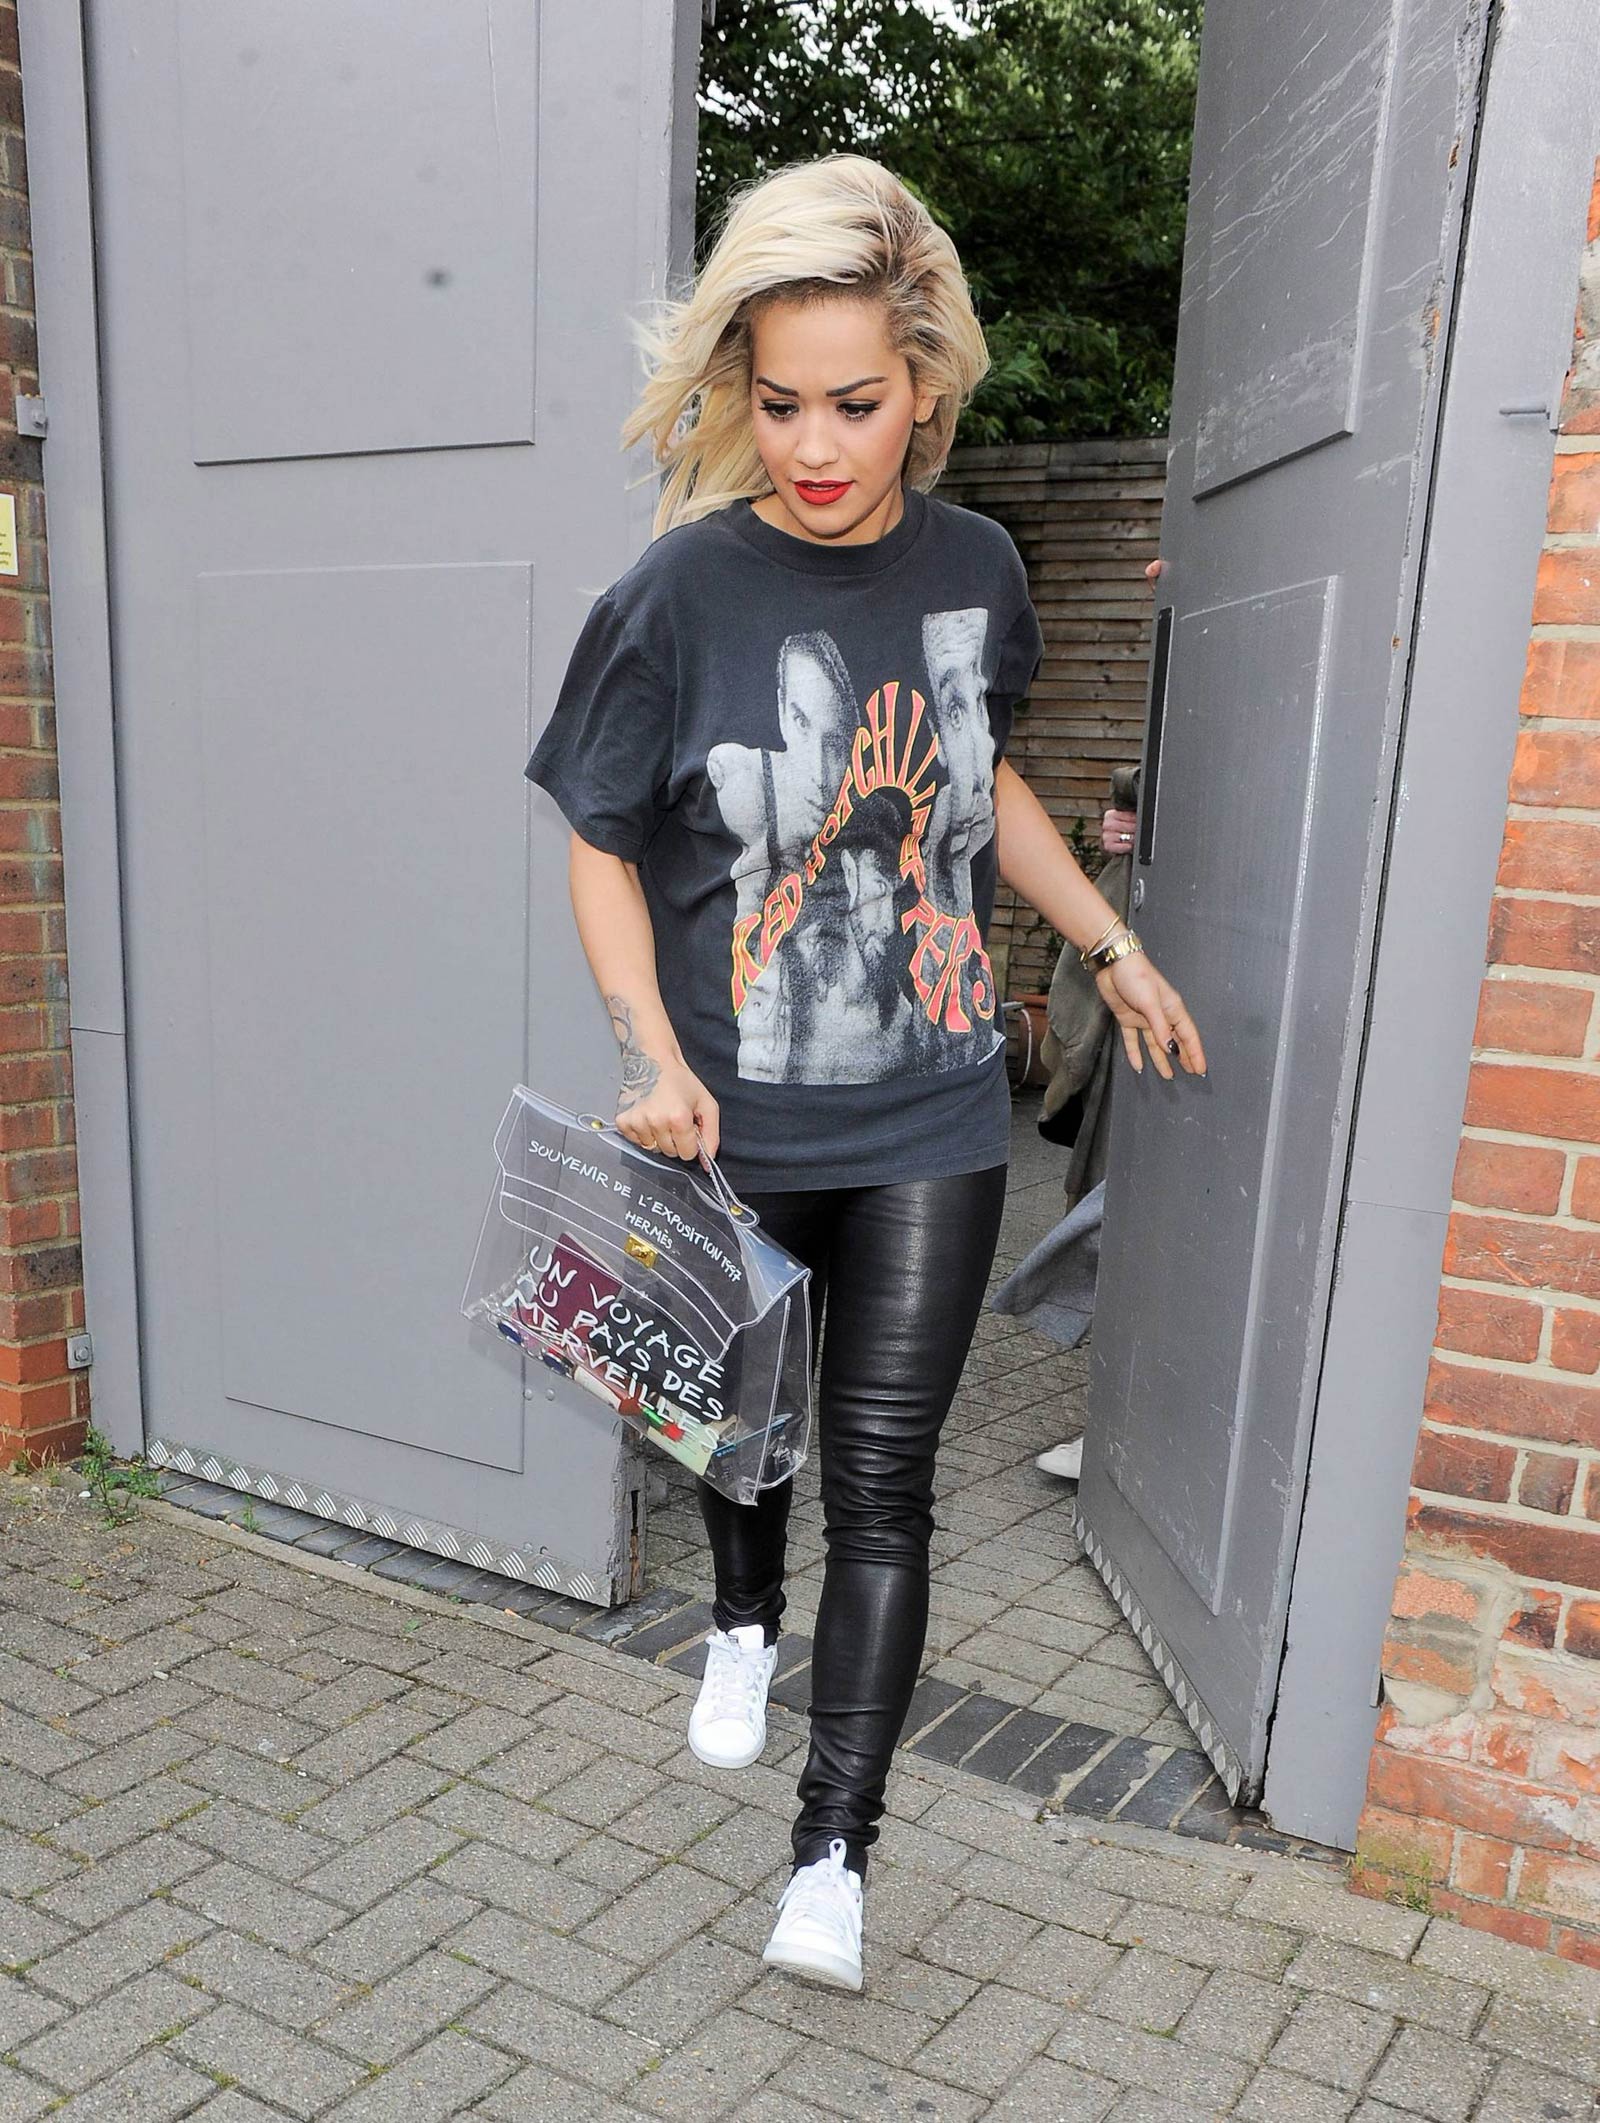 Rita Ora leaving a photo studio in London